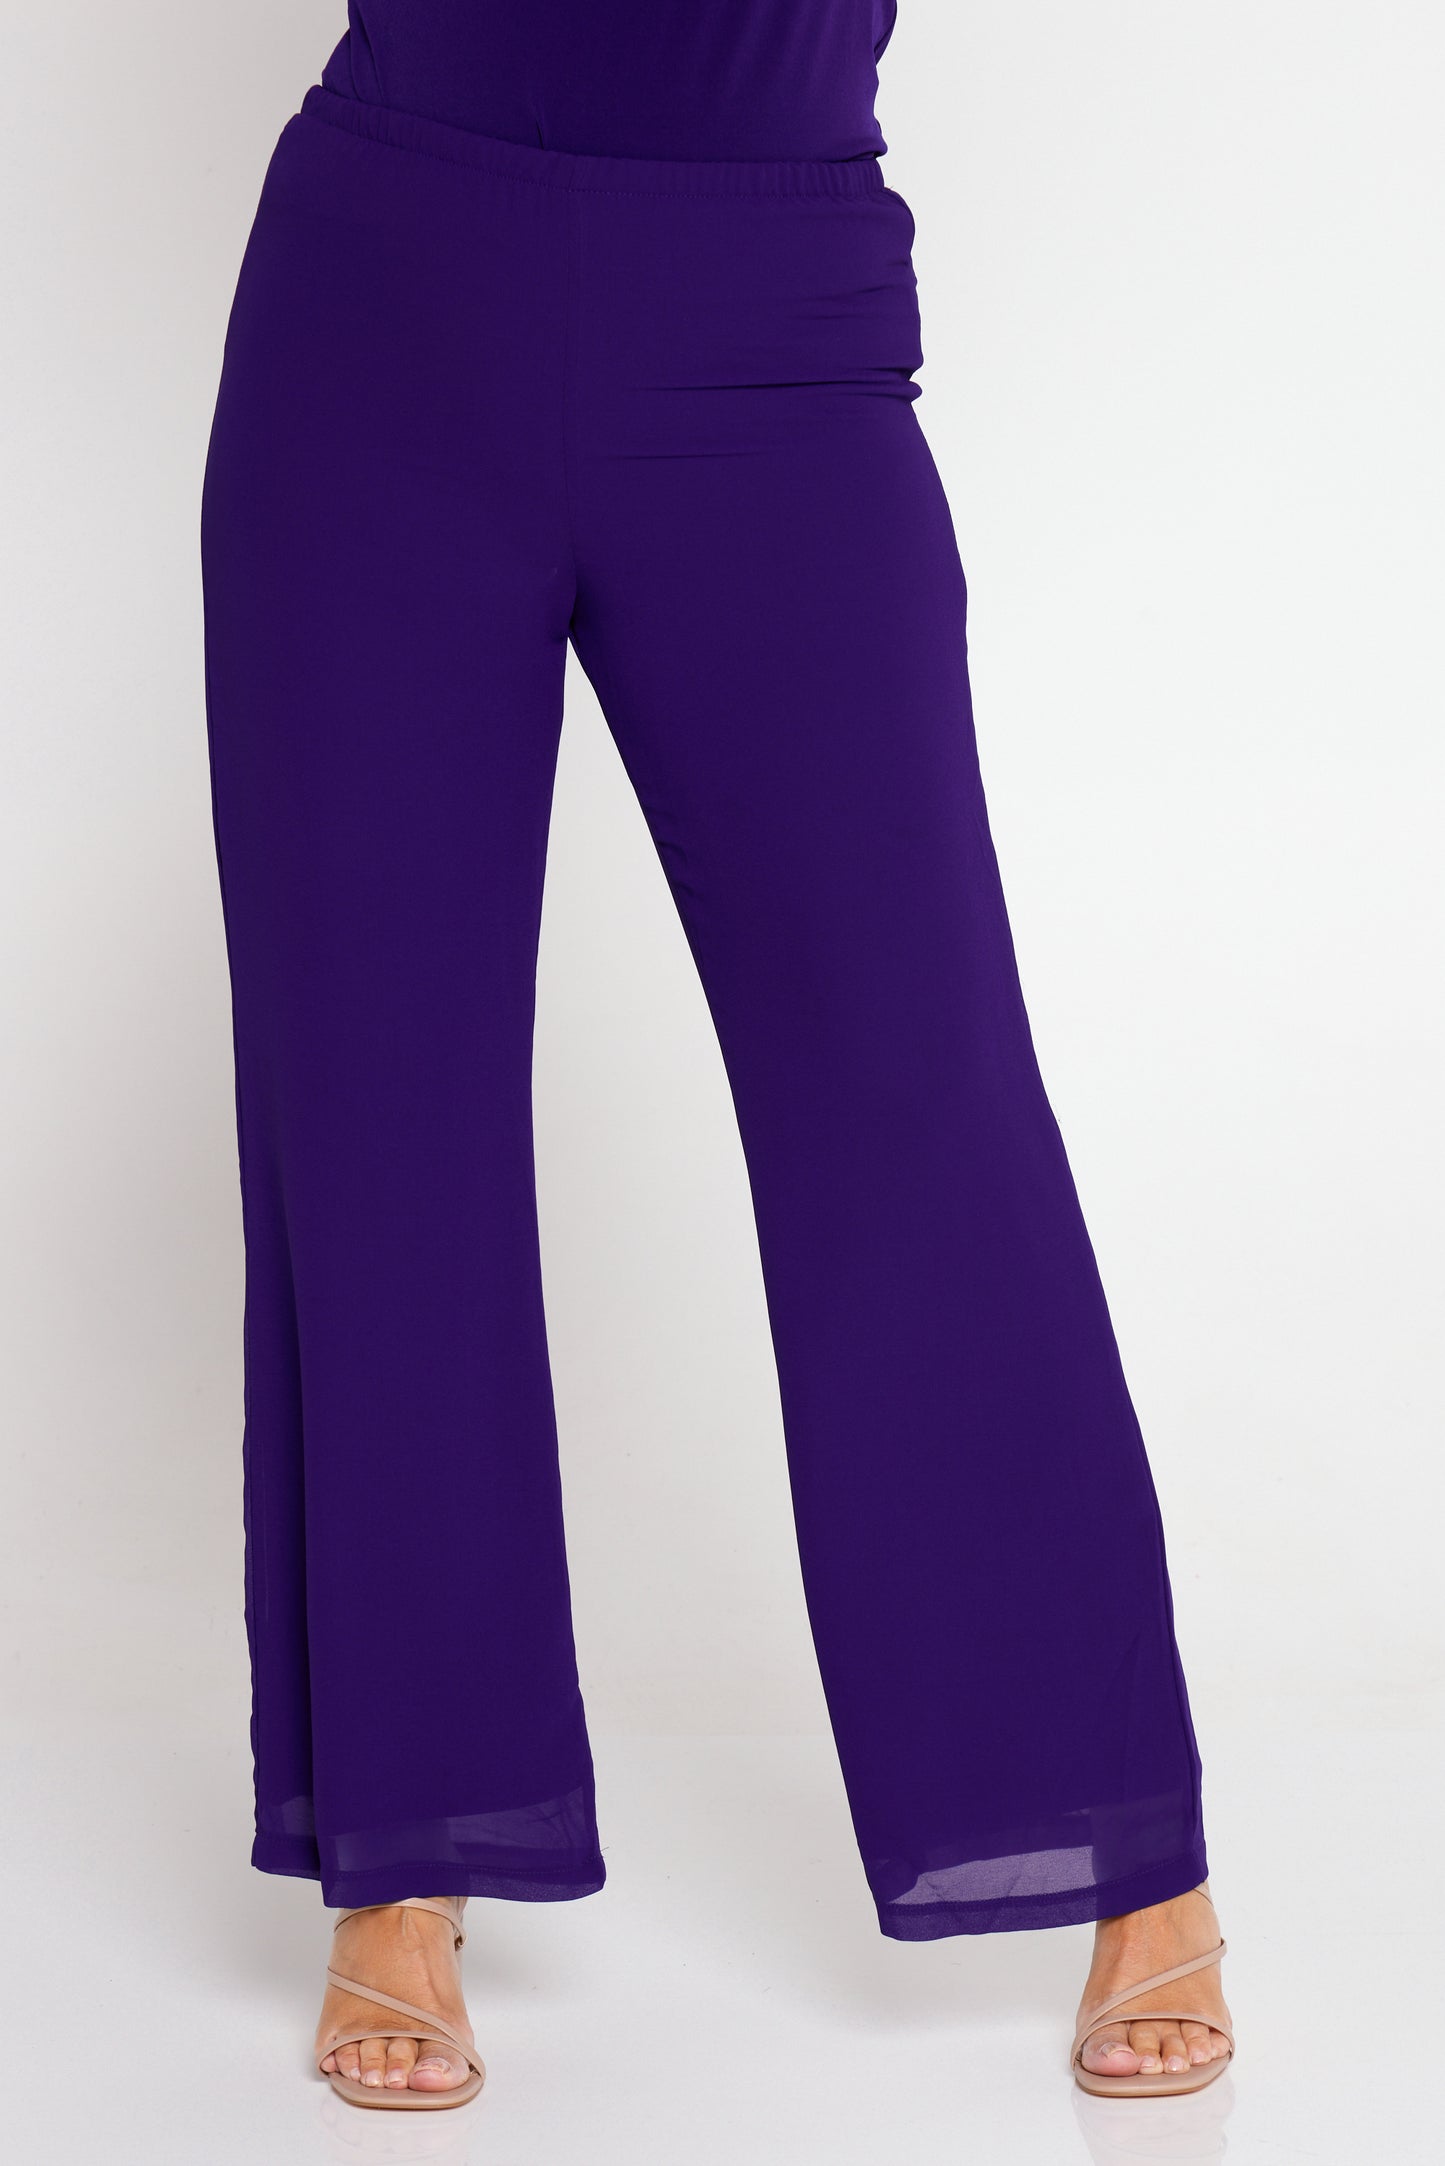 Rendezvous Chiffon Pants - Purple